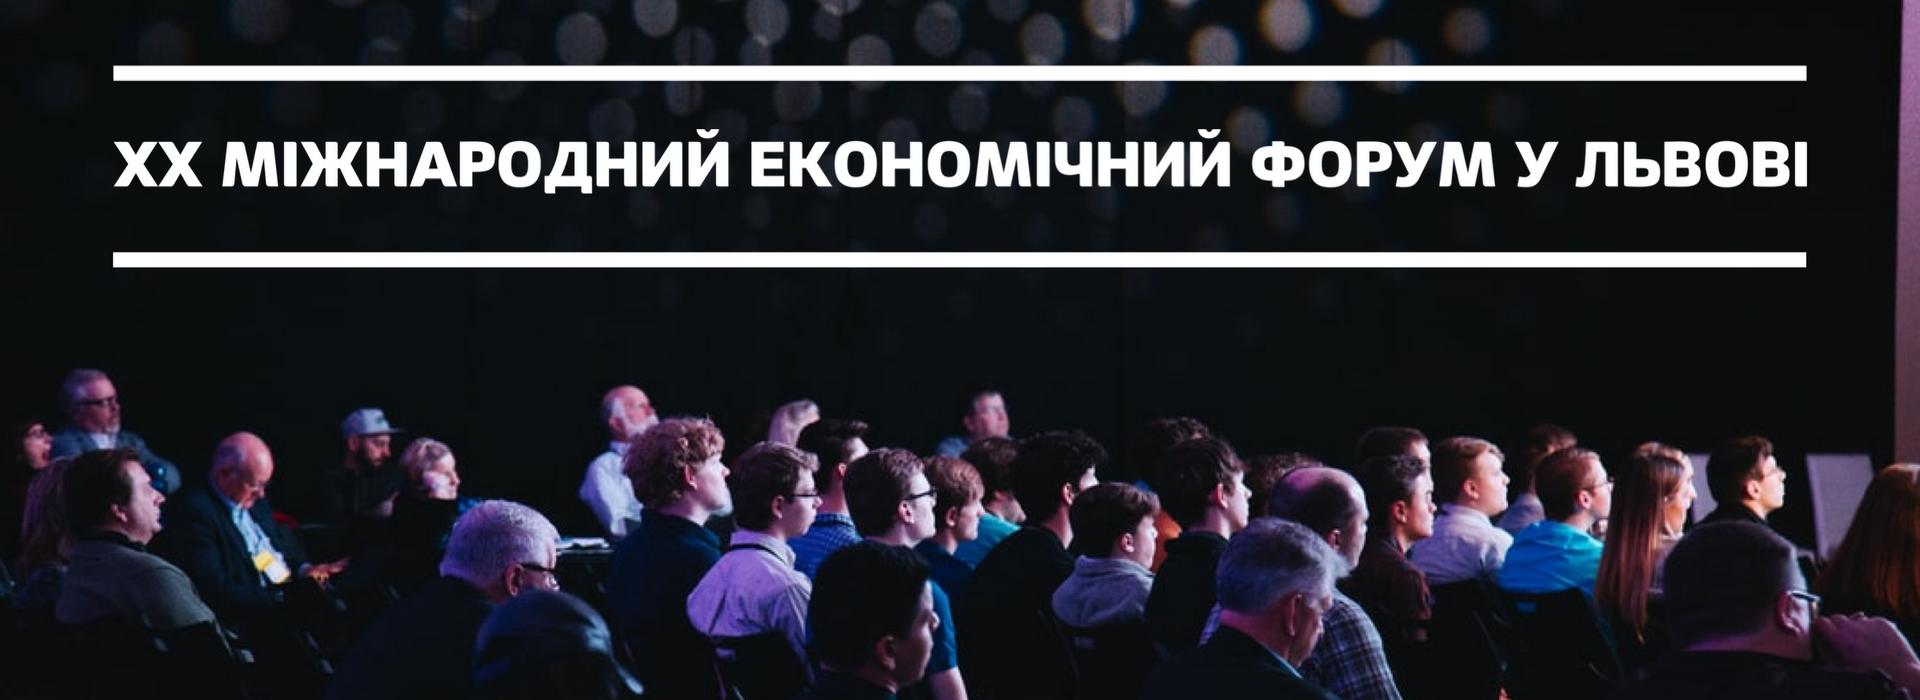 Carlsberg Ukraine Is a Business Partner of the XX International Economic Forum in Lviv